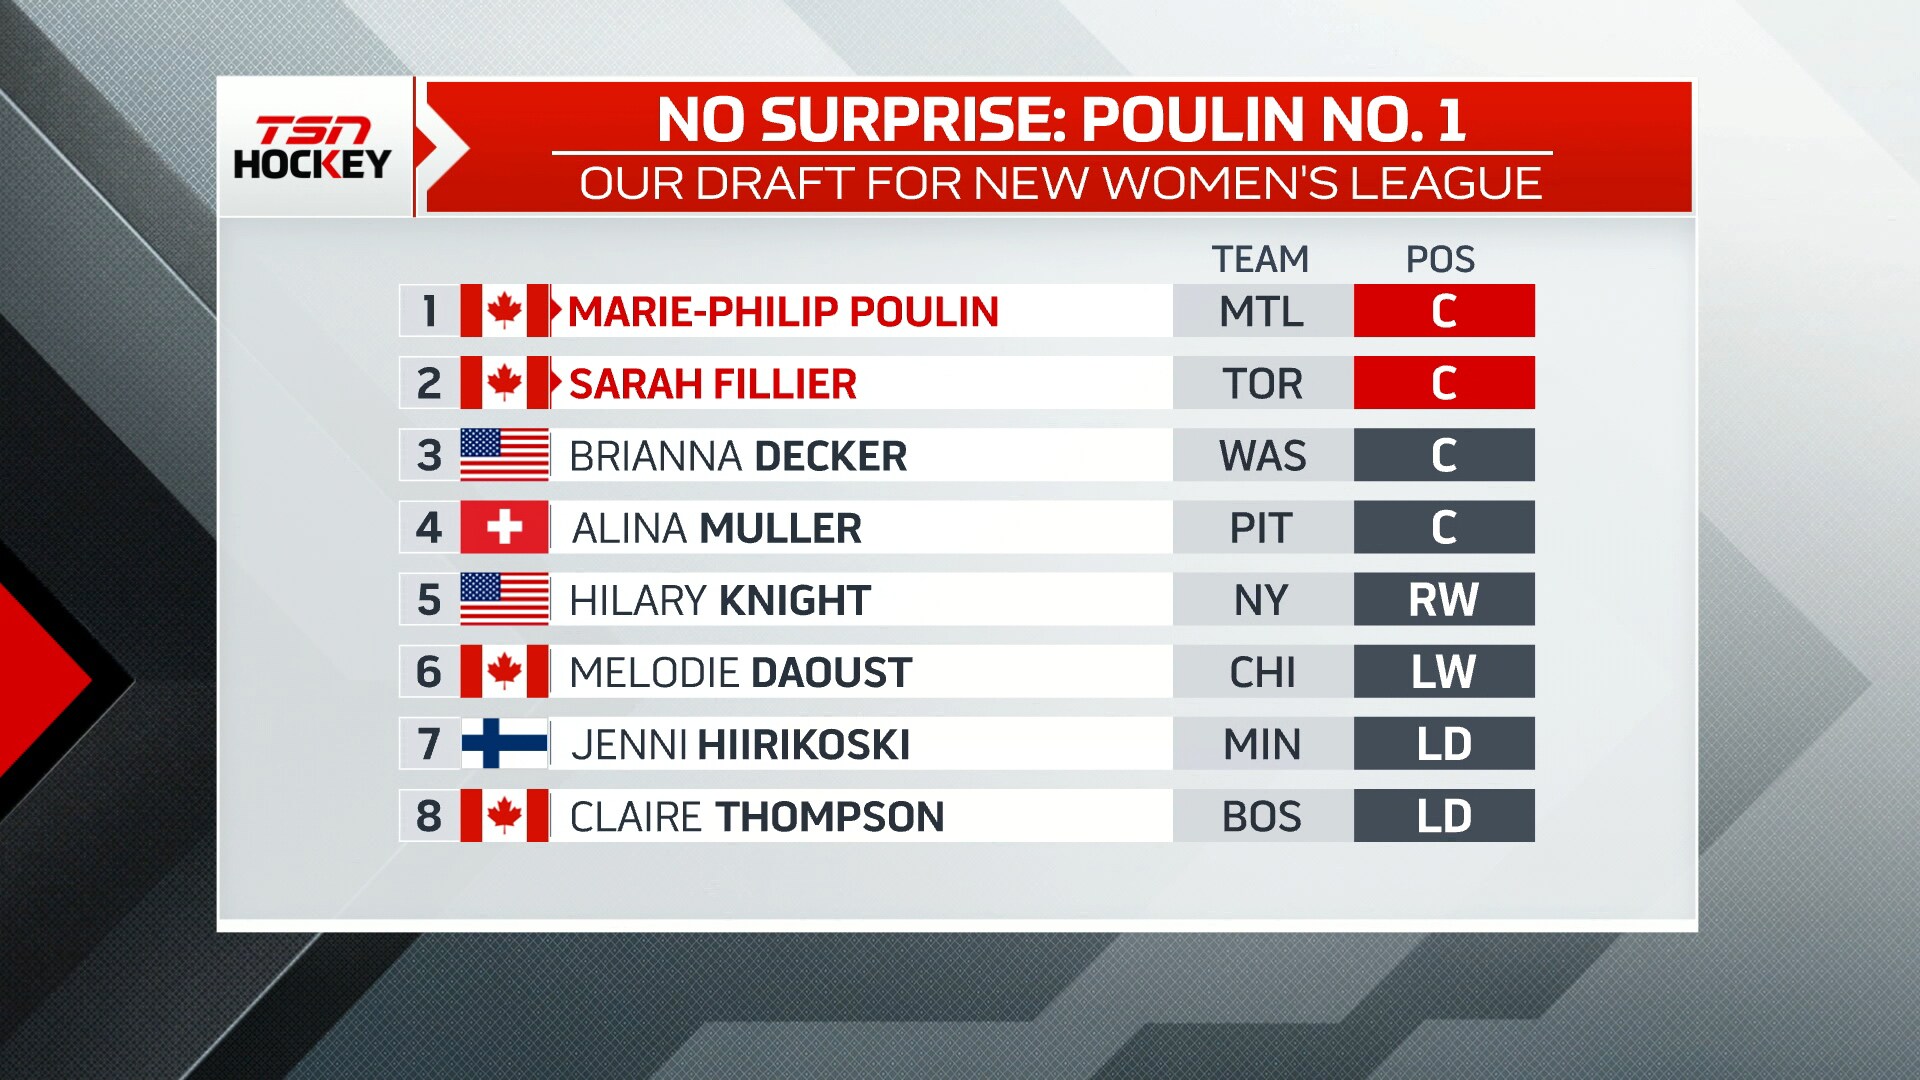 Button, Salvian conduct mock draft for new women's hockey league